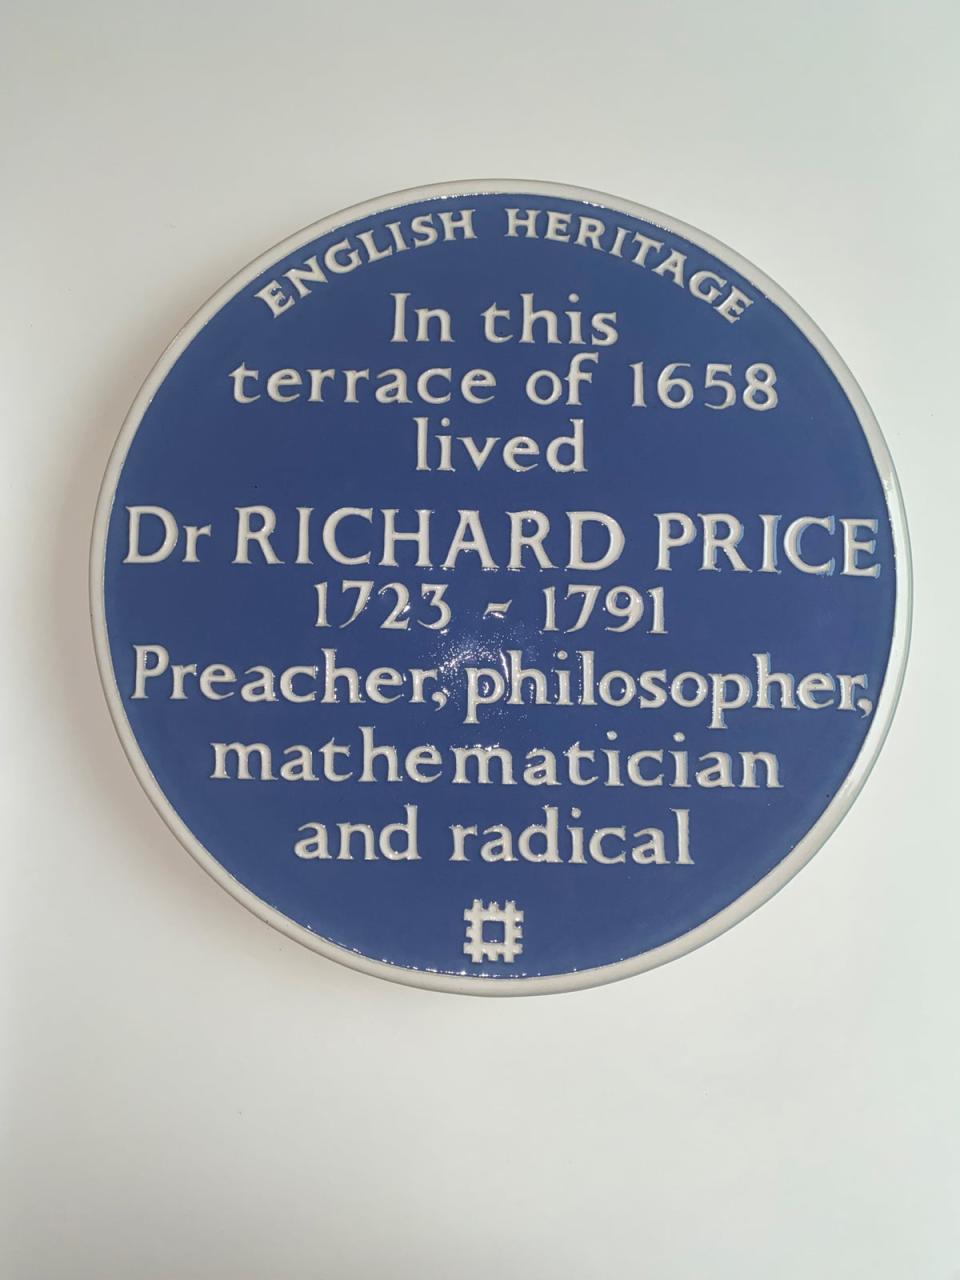 The plaque honouring Richard Price (English Heritage)